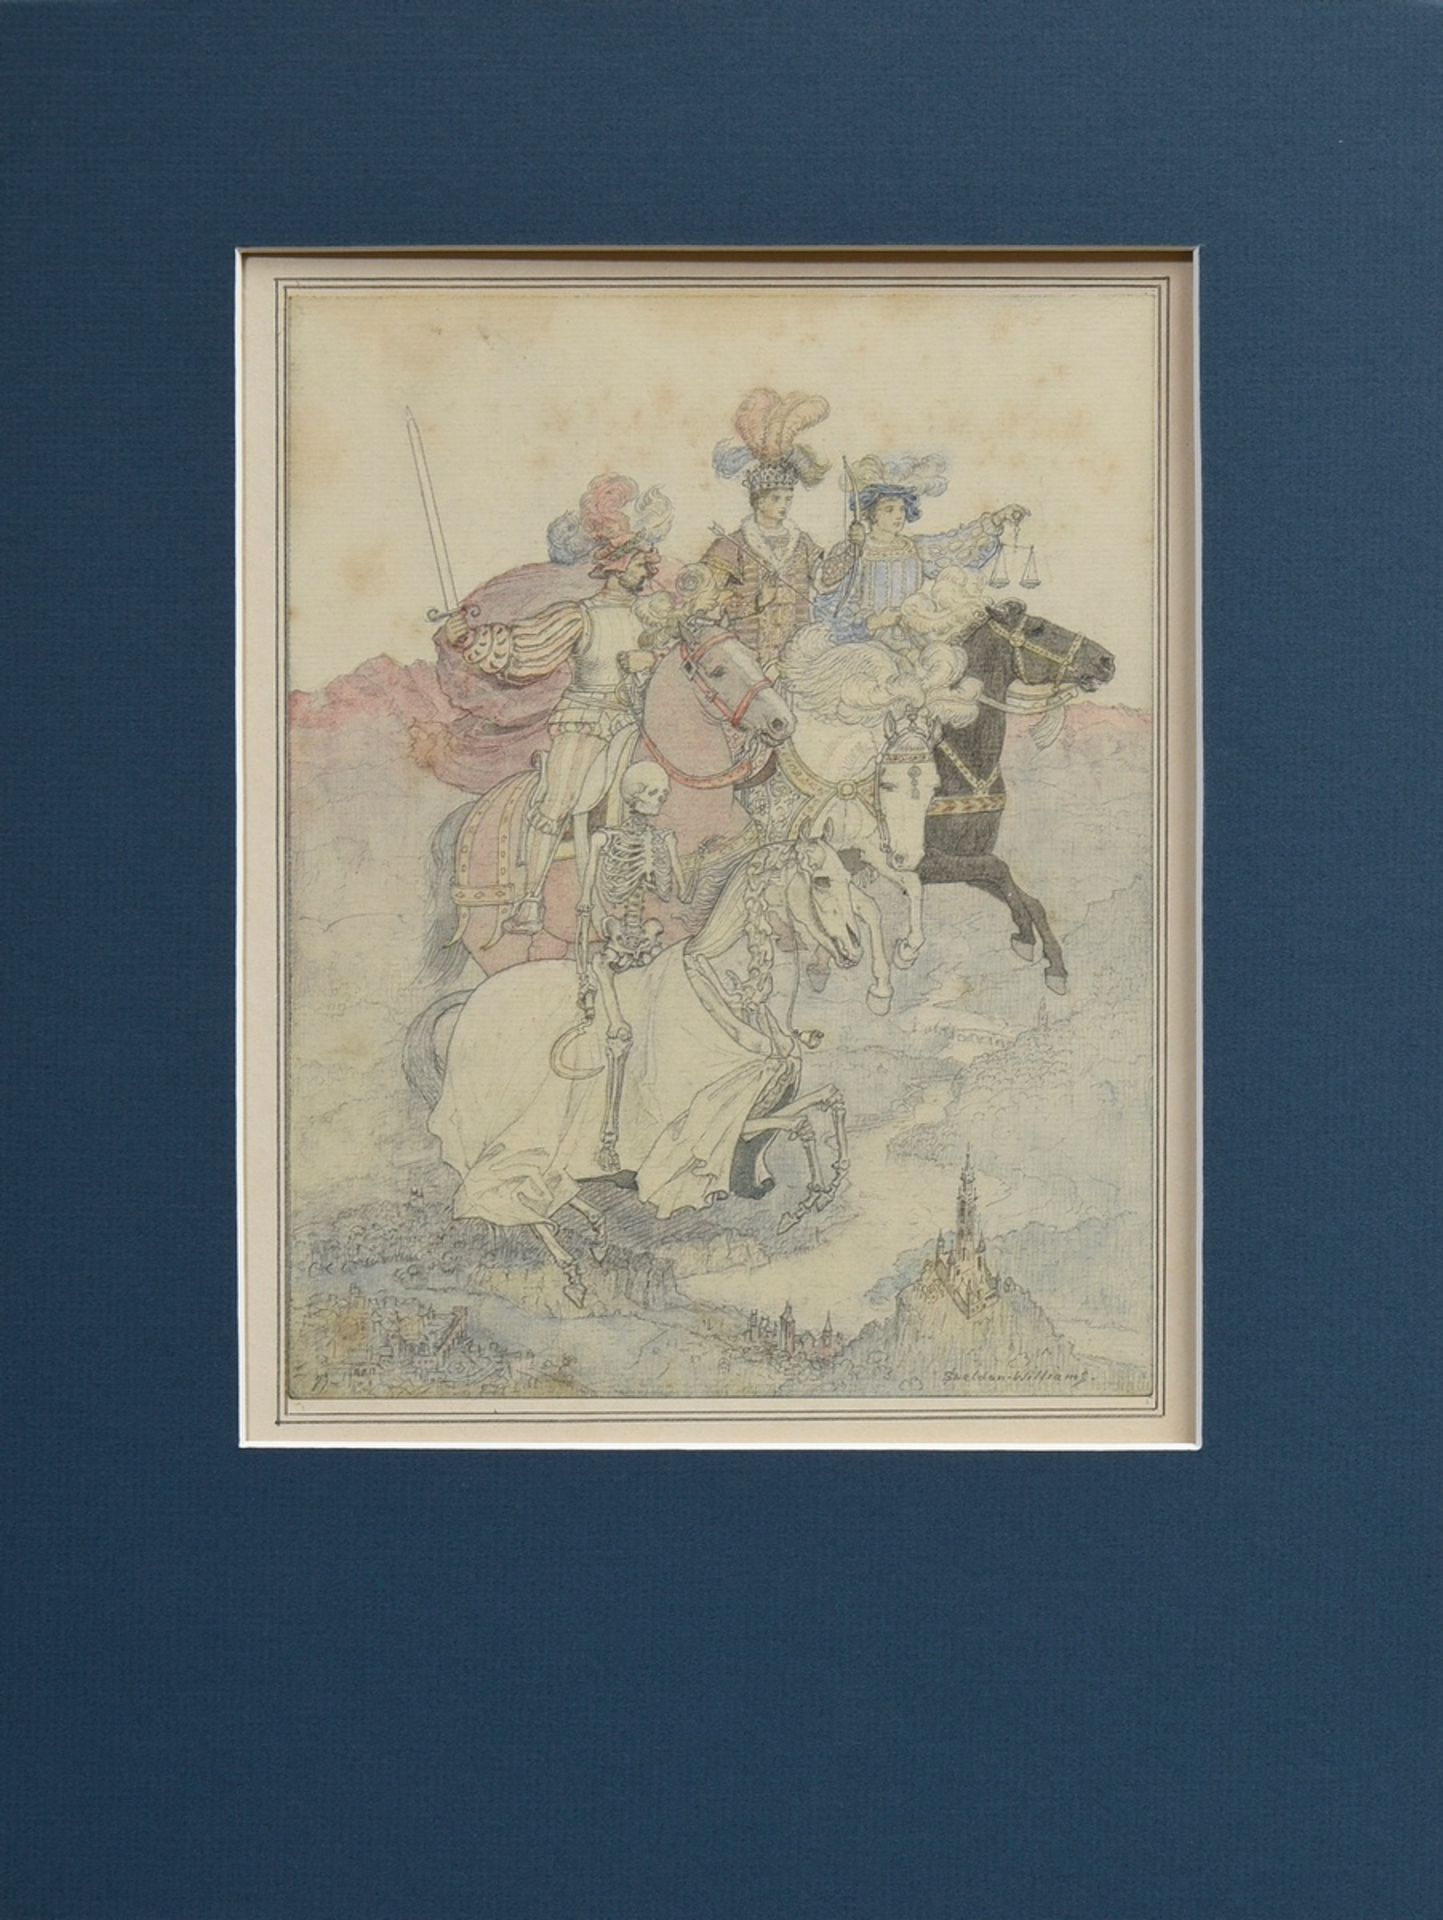 Sheldon-Williams, Inglis (1890-1940) "The Four Horsemen of the Apocalypse", watercoloured pencil an - Image 3 of 4